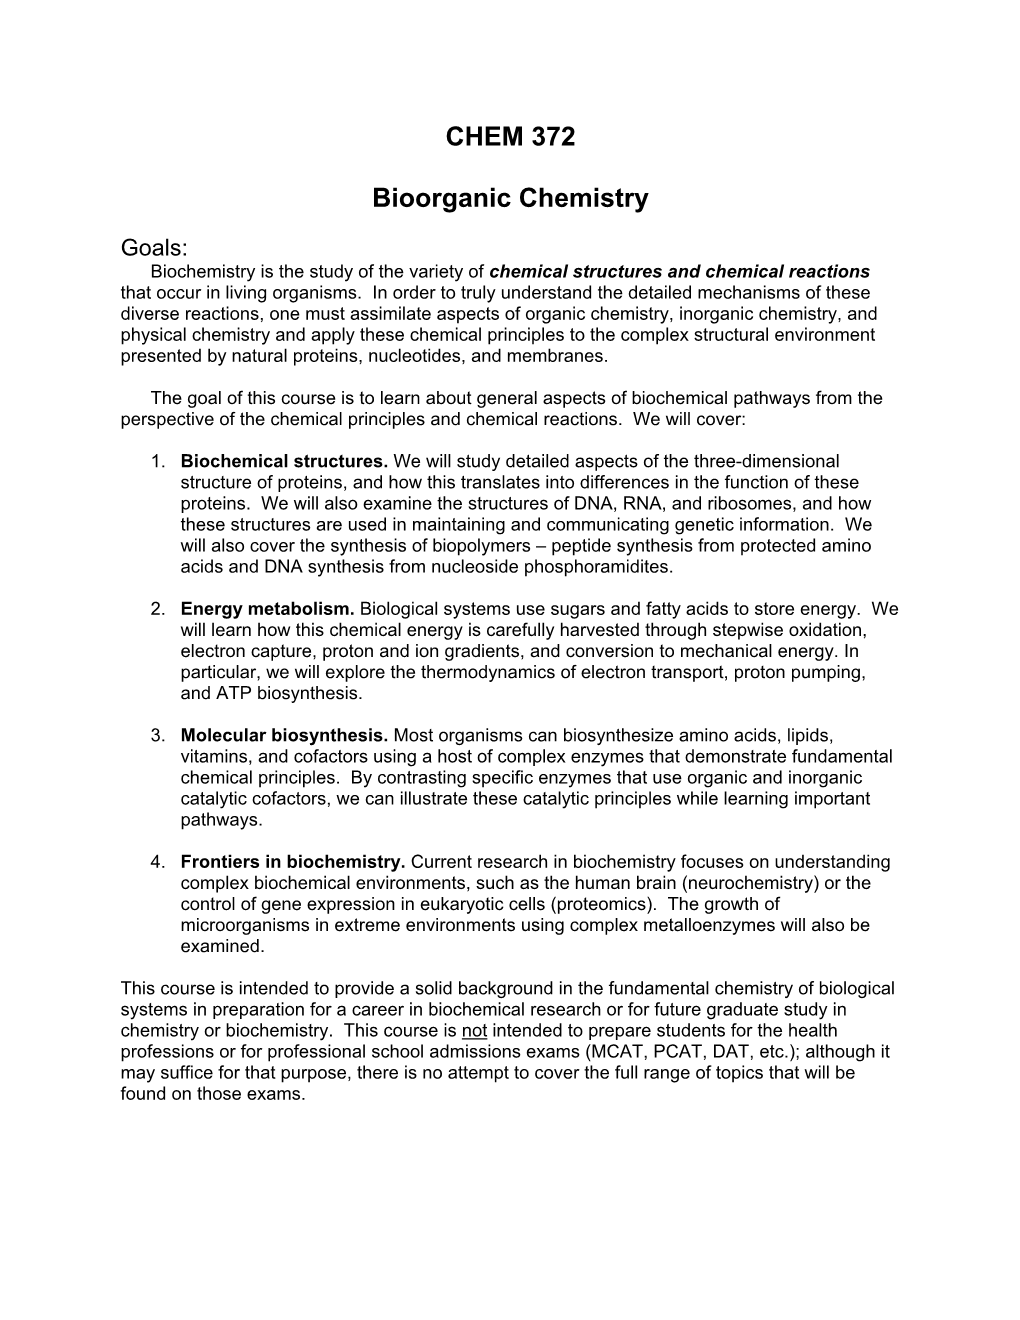 CHEM 372 Bioorganic Chemistry